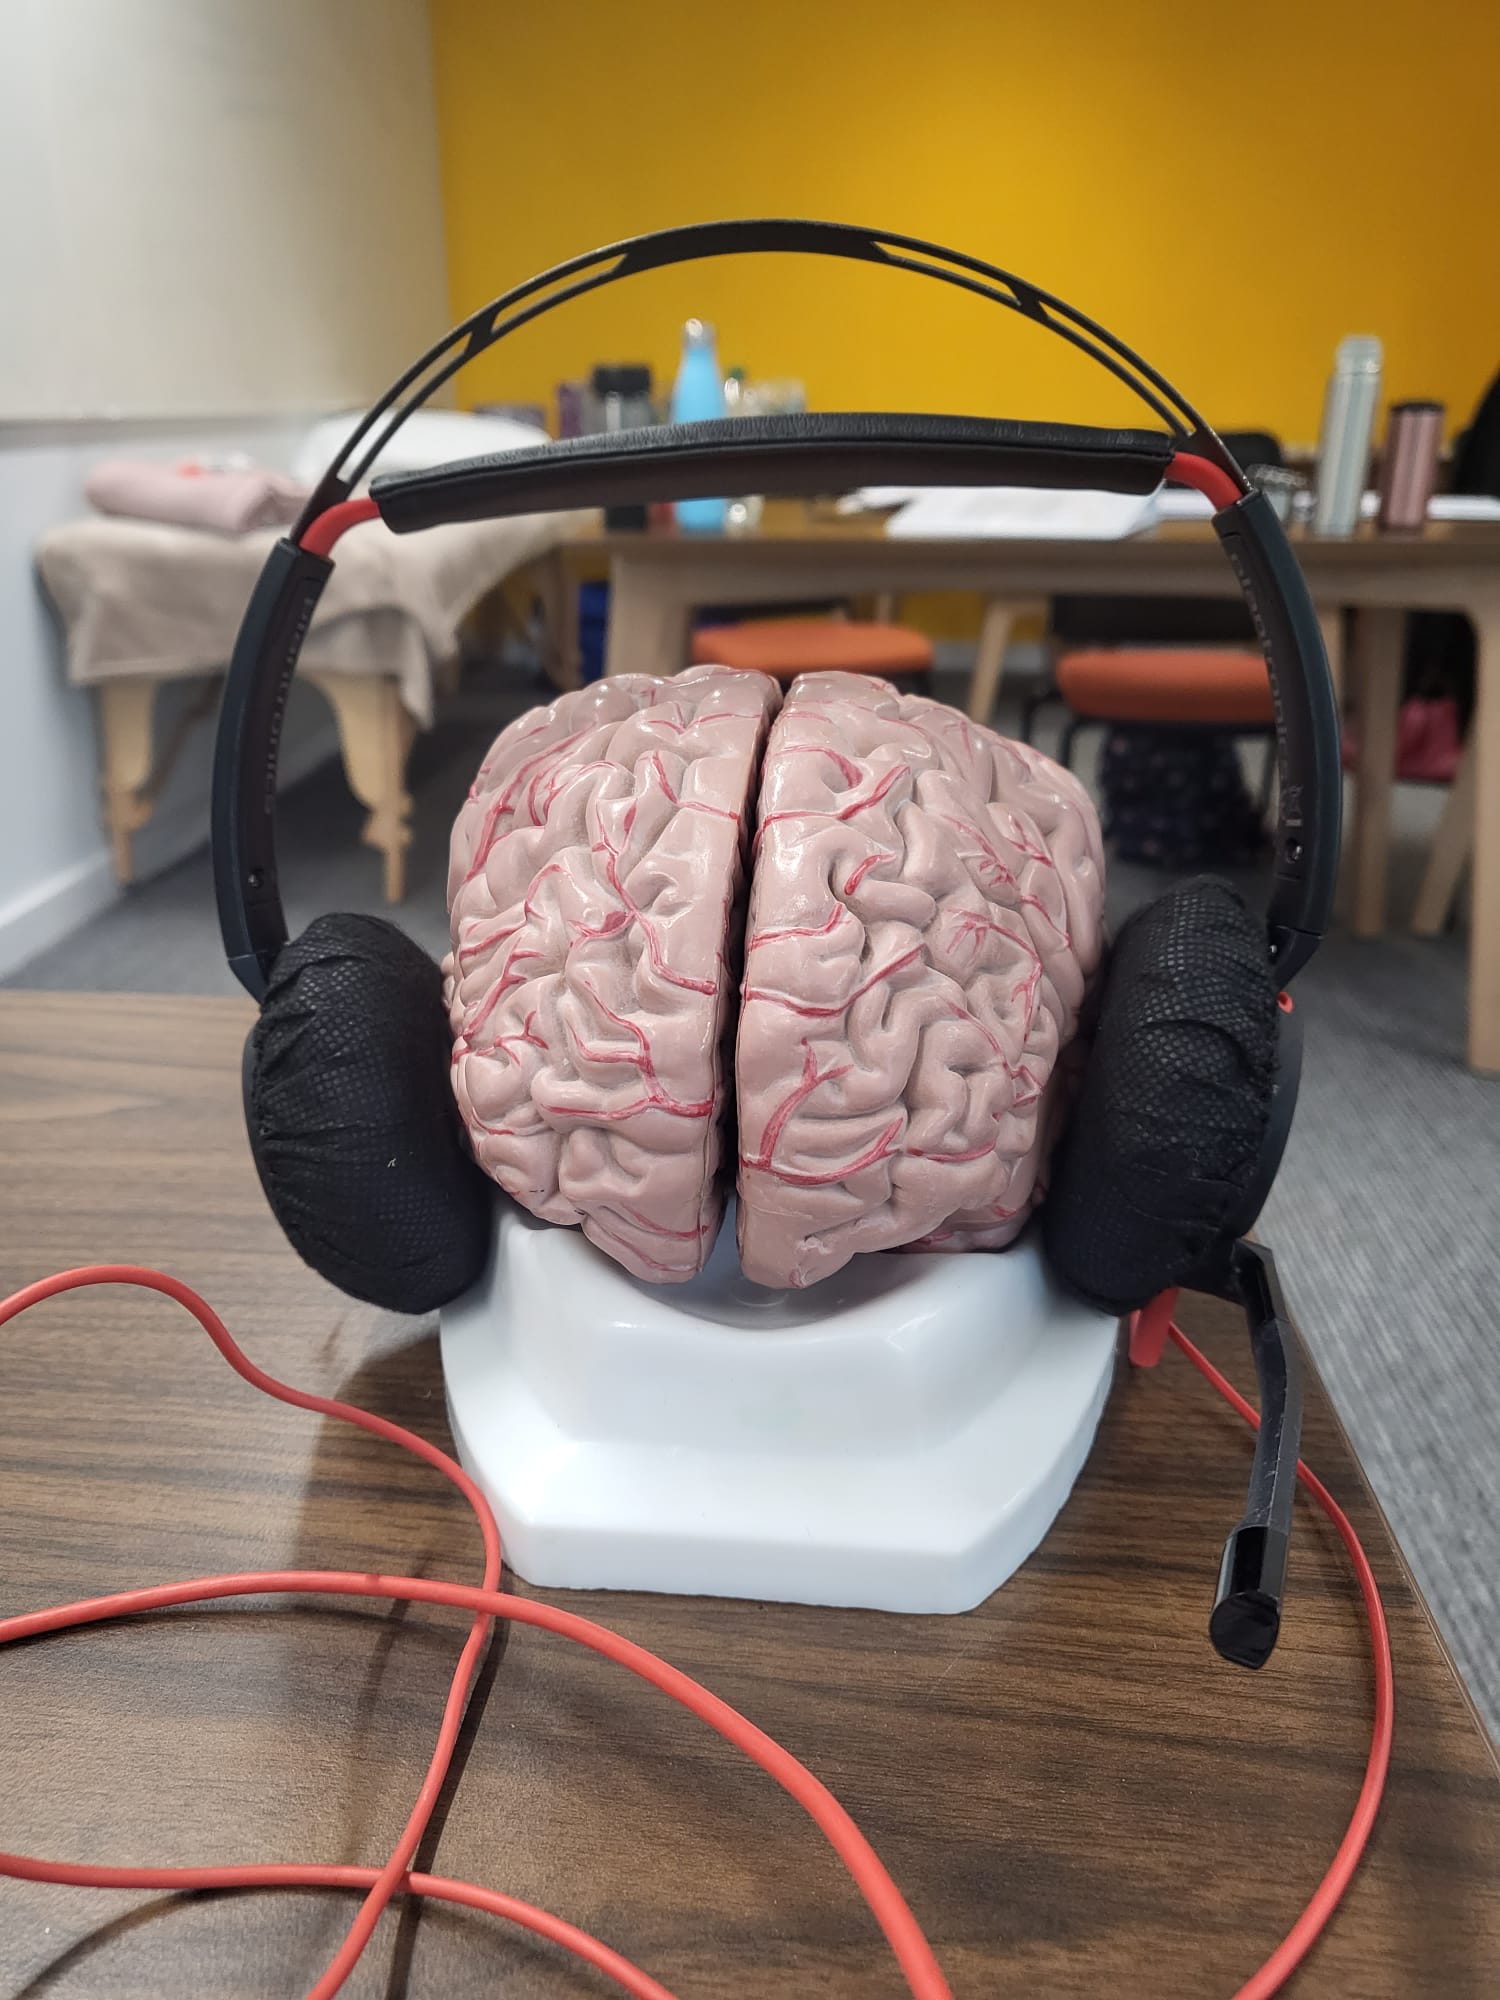 A brain wearing headphones!